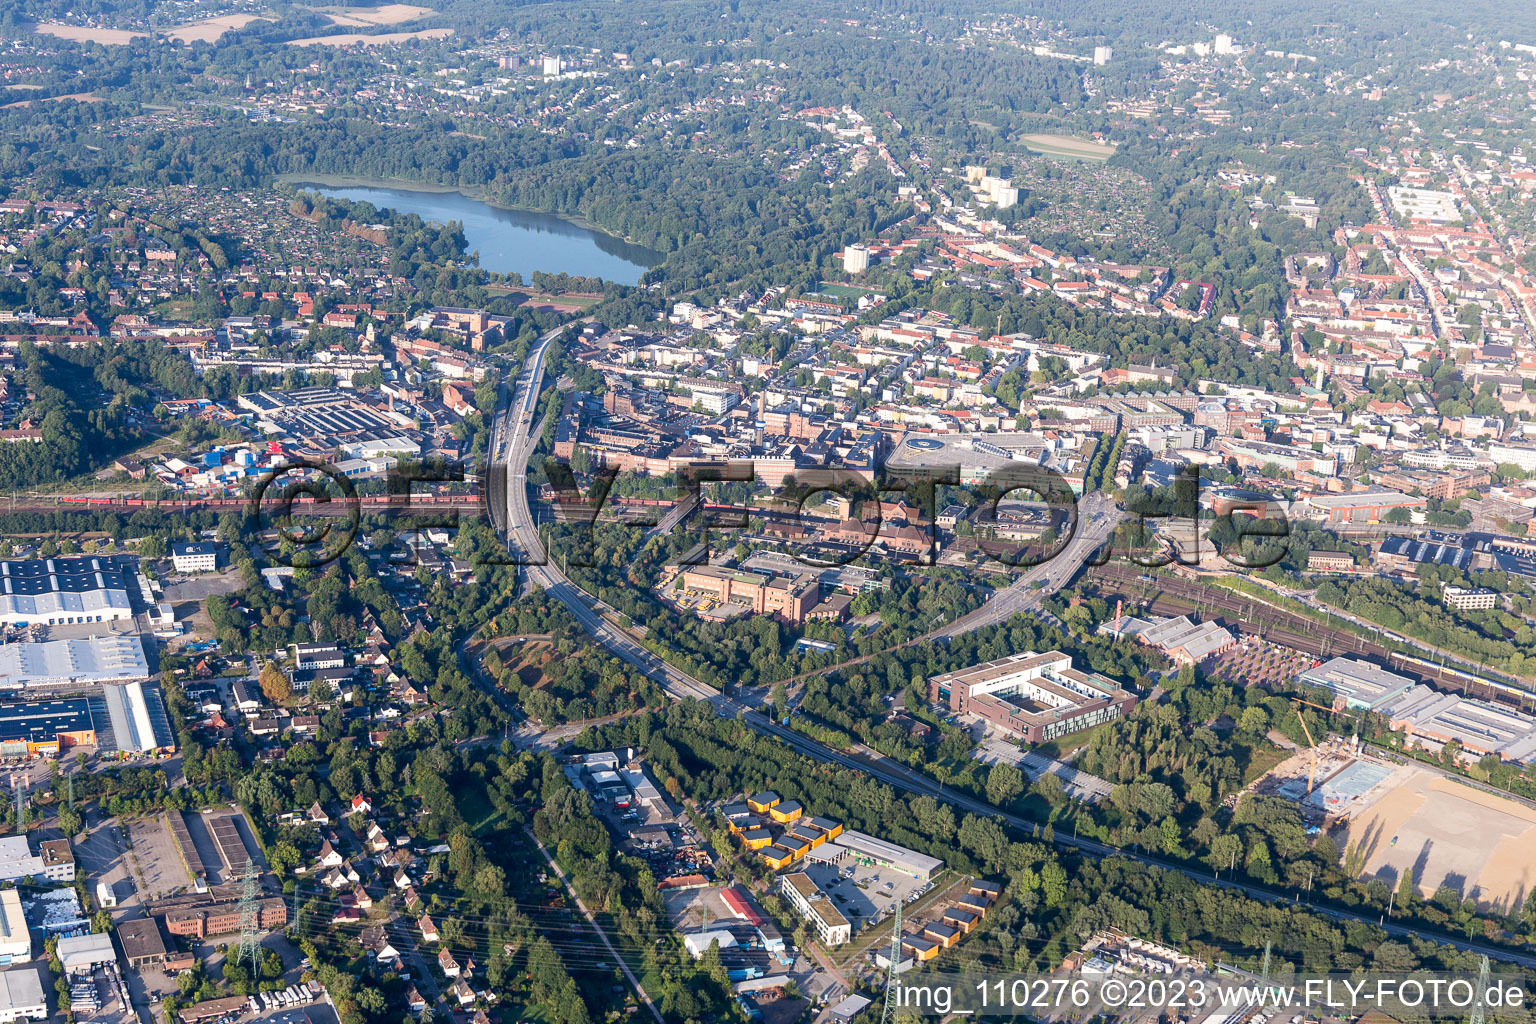 Aerial view of Harburg in the state Hamburg, Germany